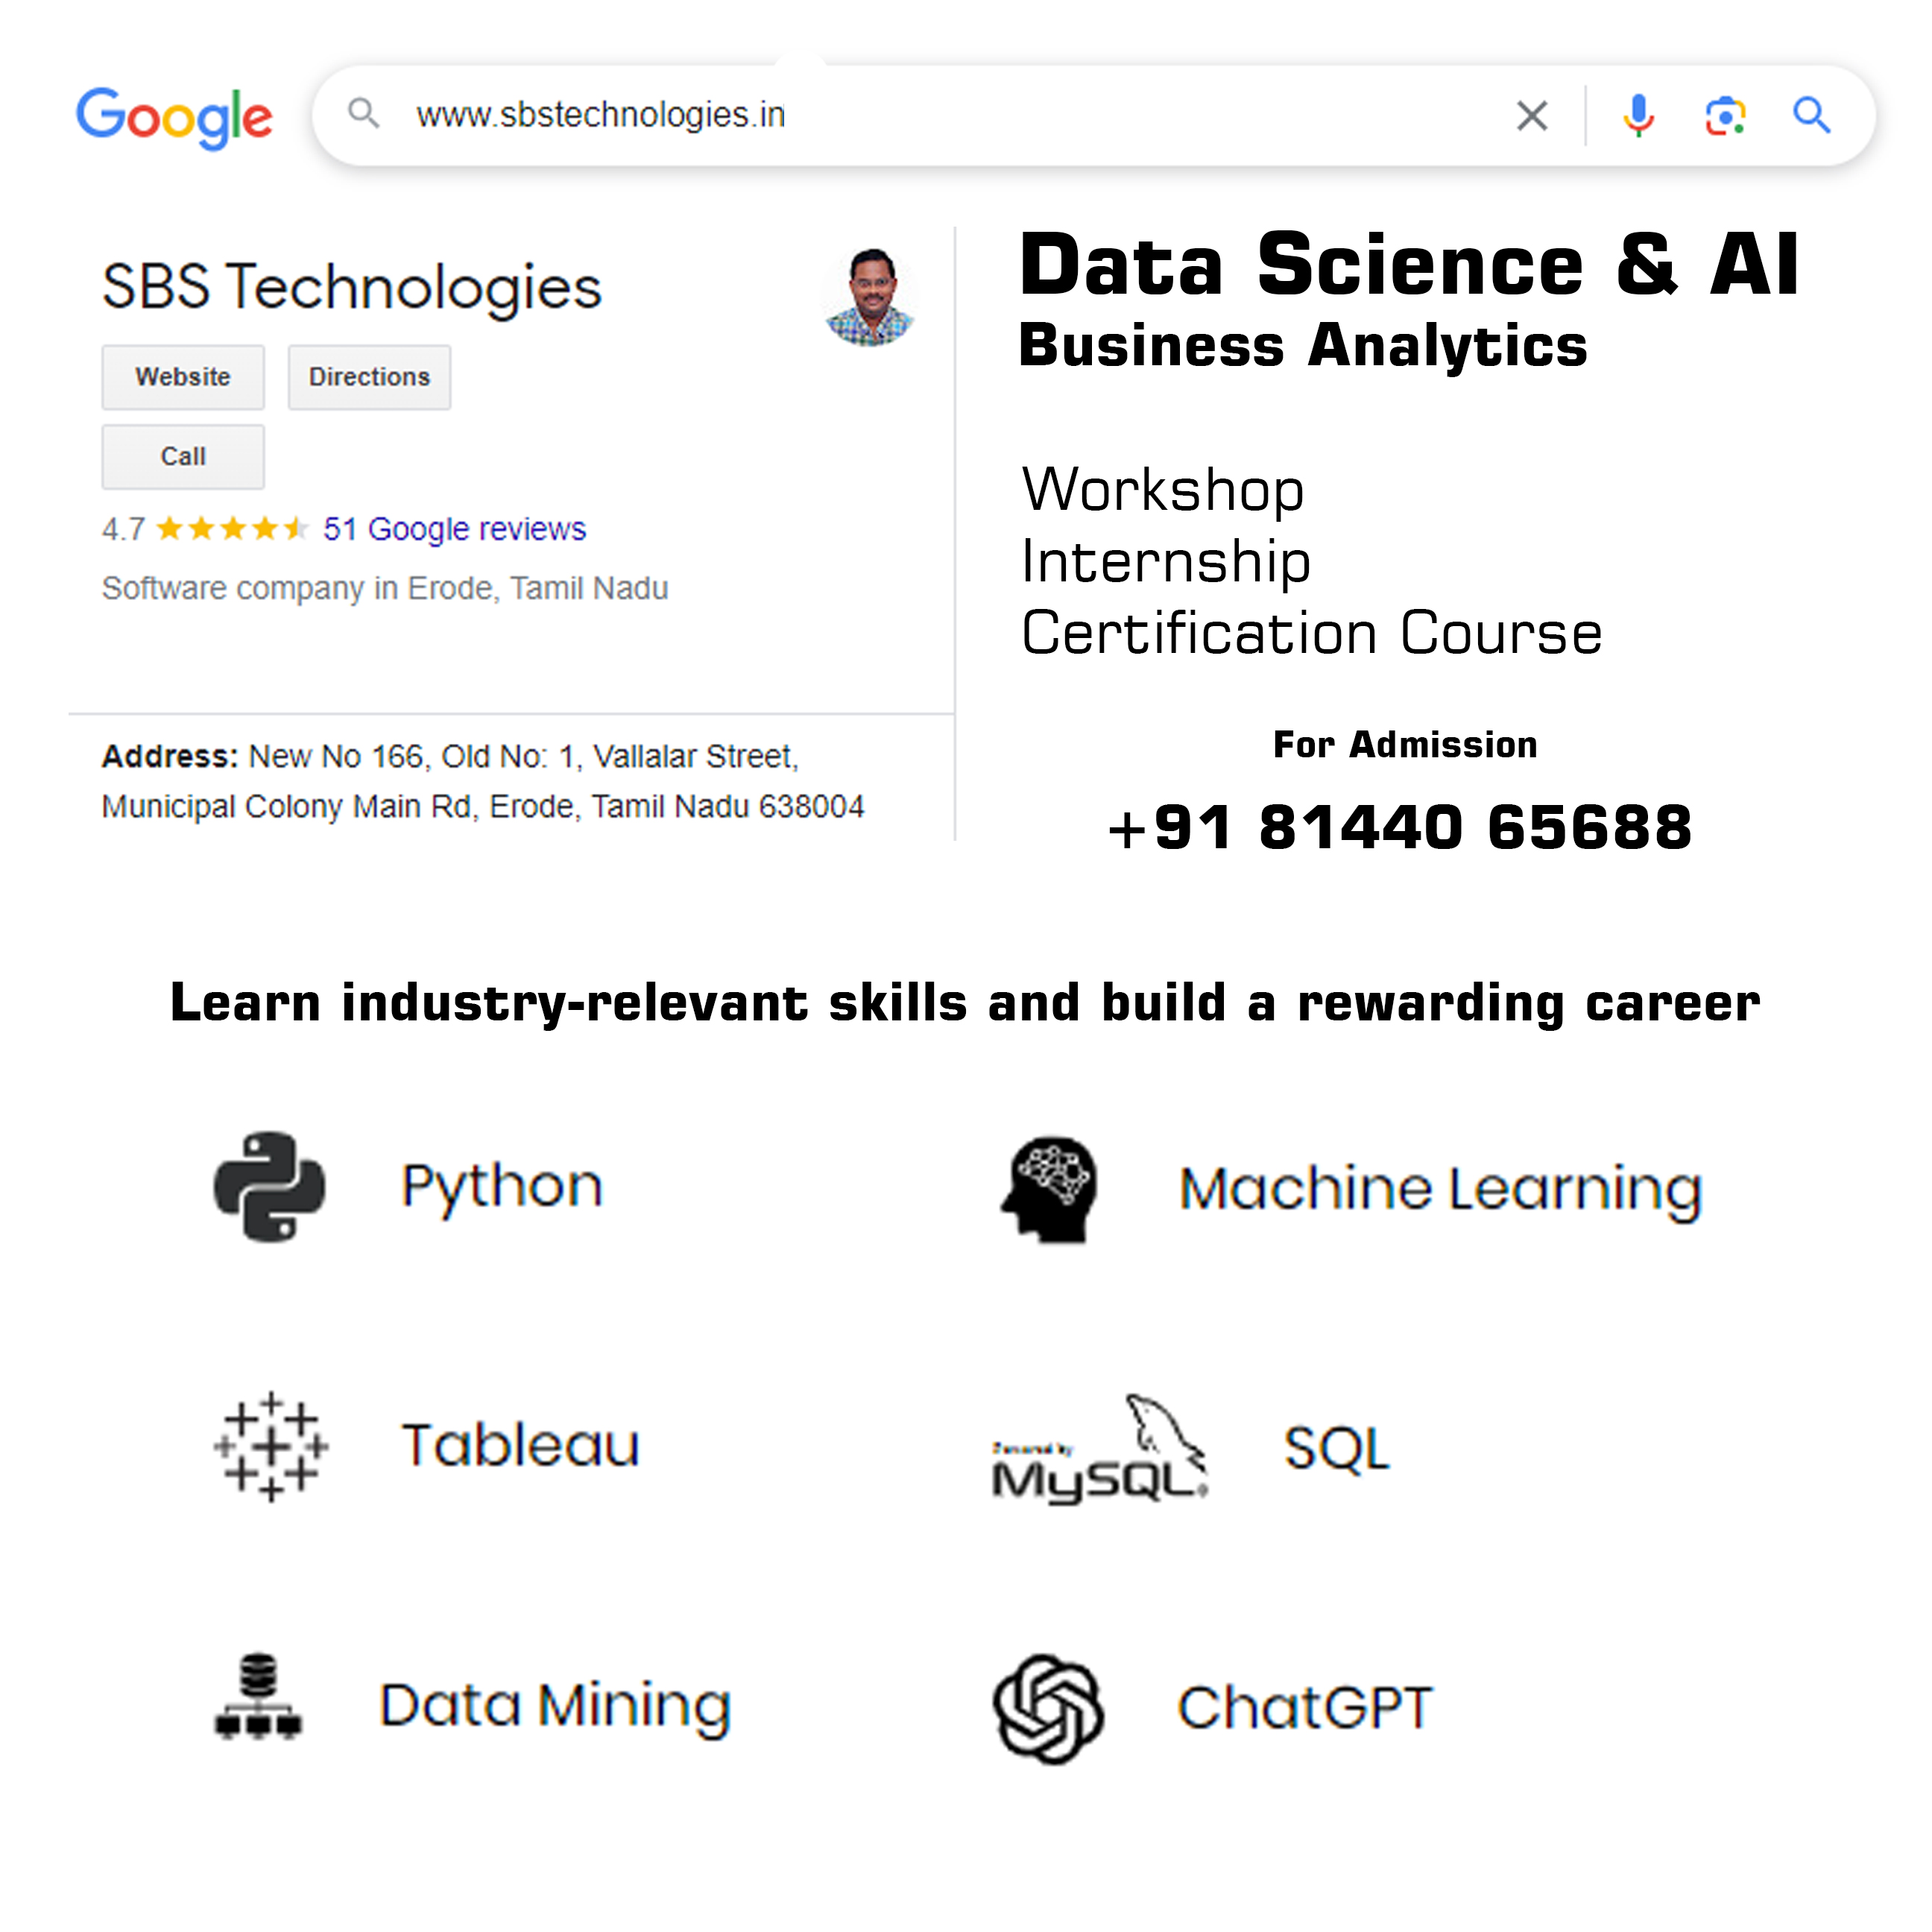 Data Science & AI